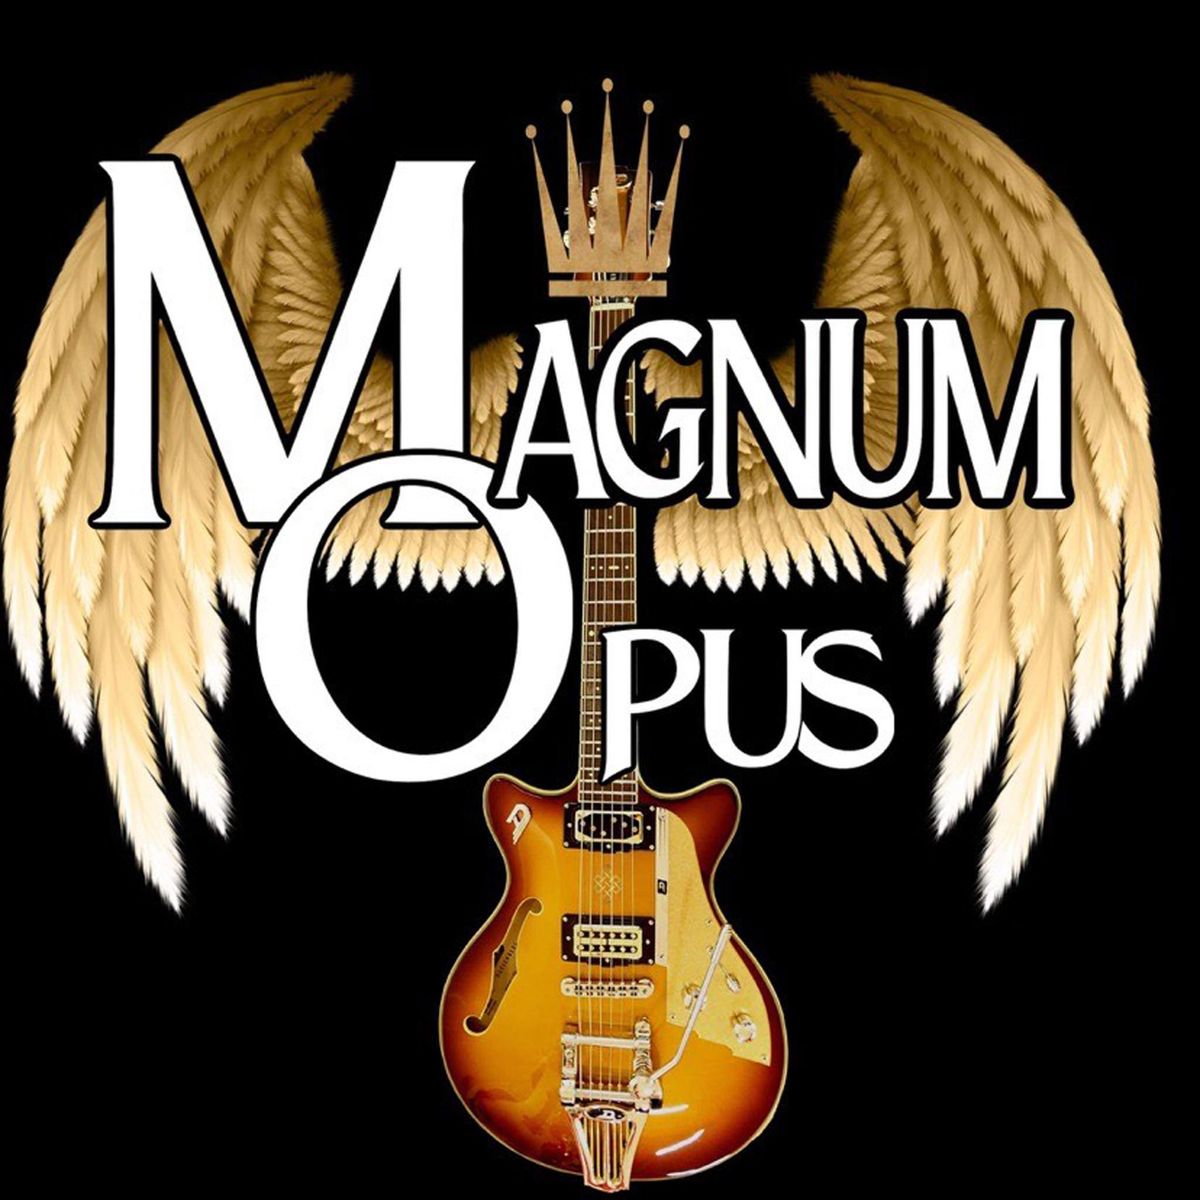 Saturday, 11\/16 - Magnum Opus at Ukulele Brand's - Land O Lakes - 7:30pm-10:30pm